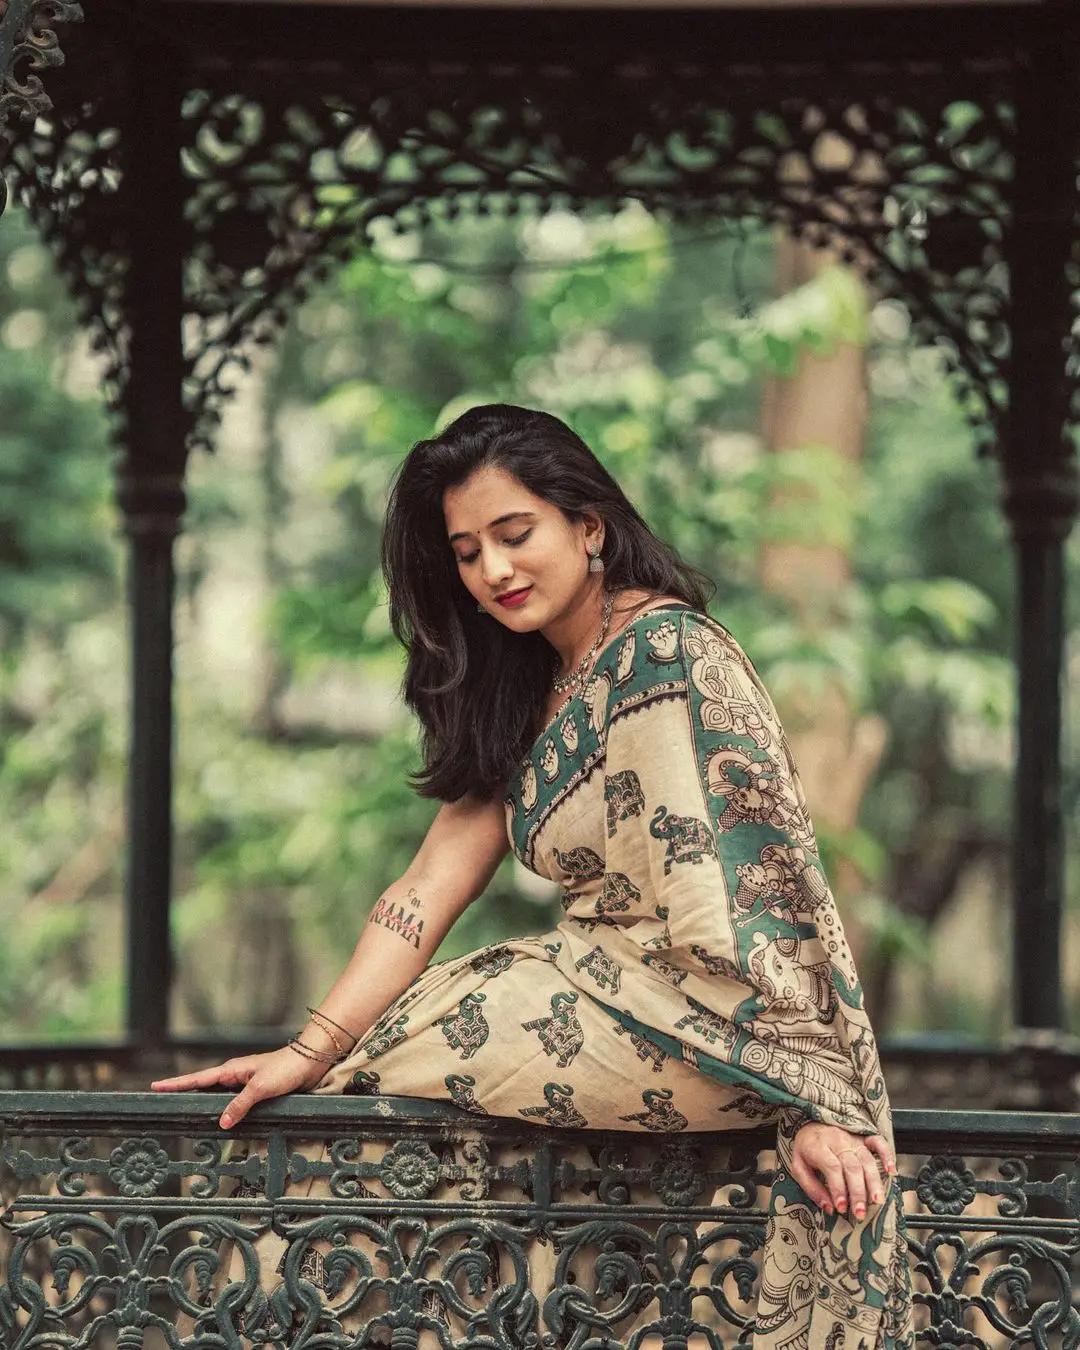 youtube actress viraajita in traditional green saree blouse